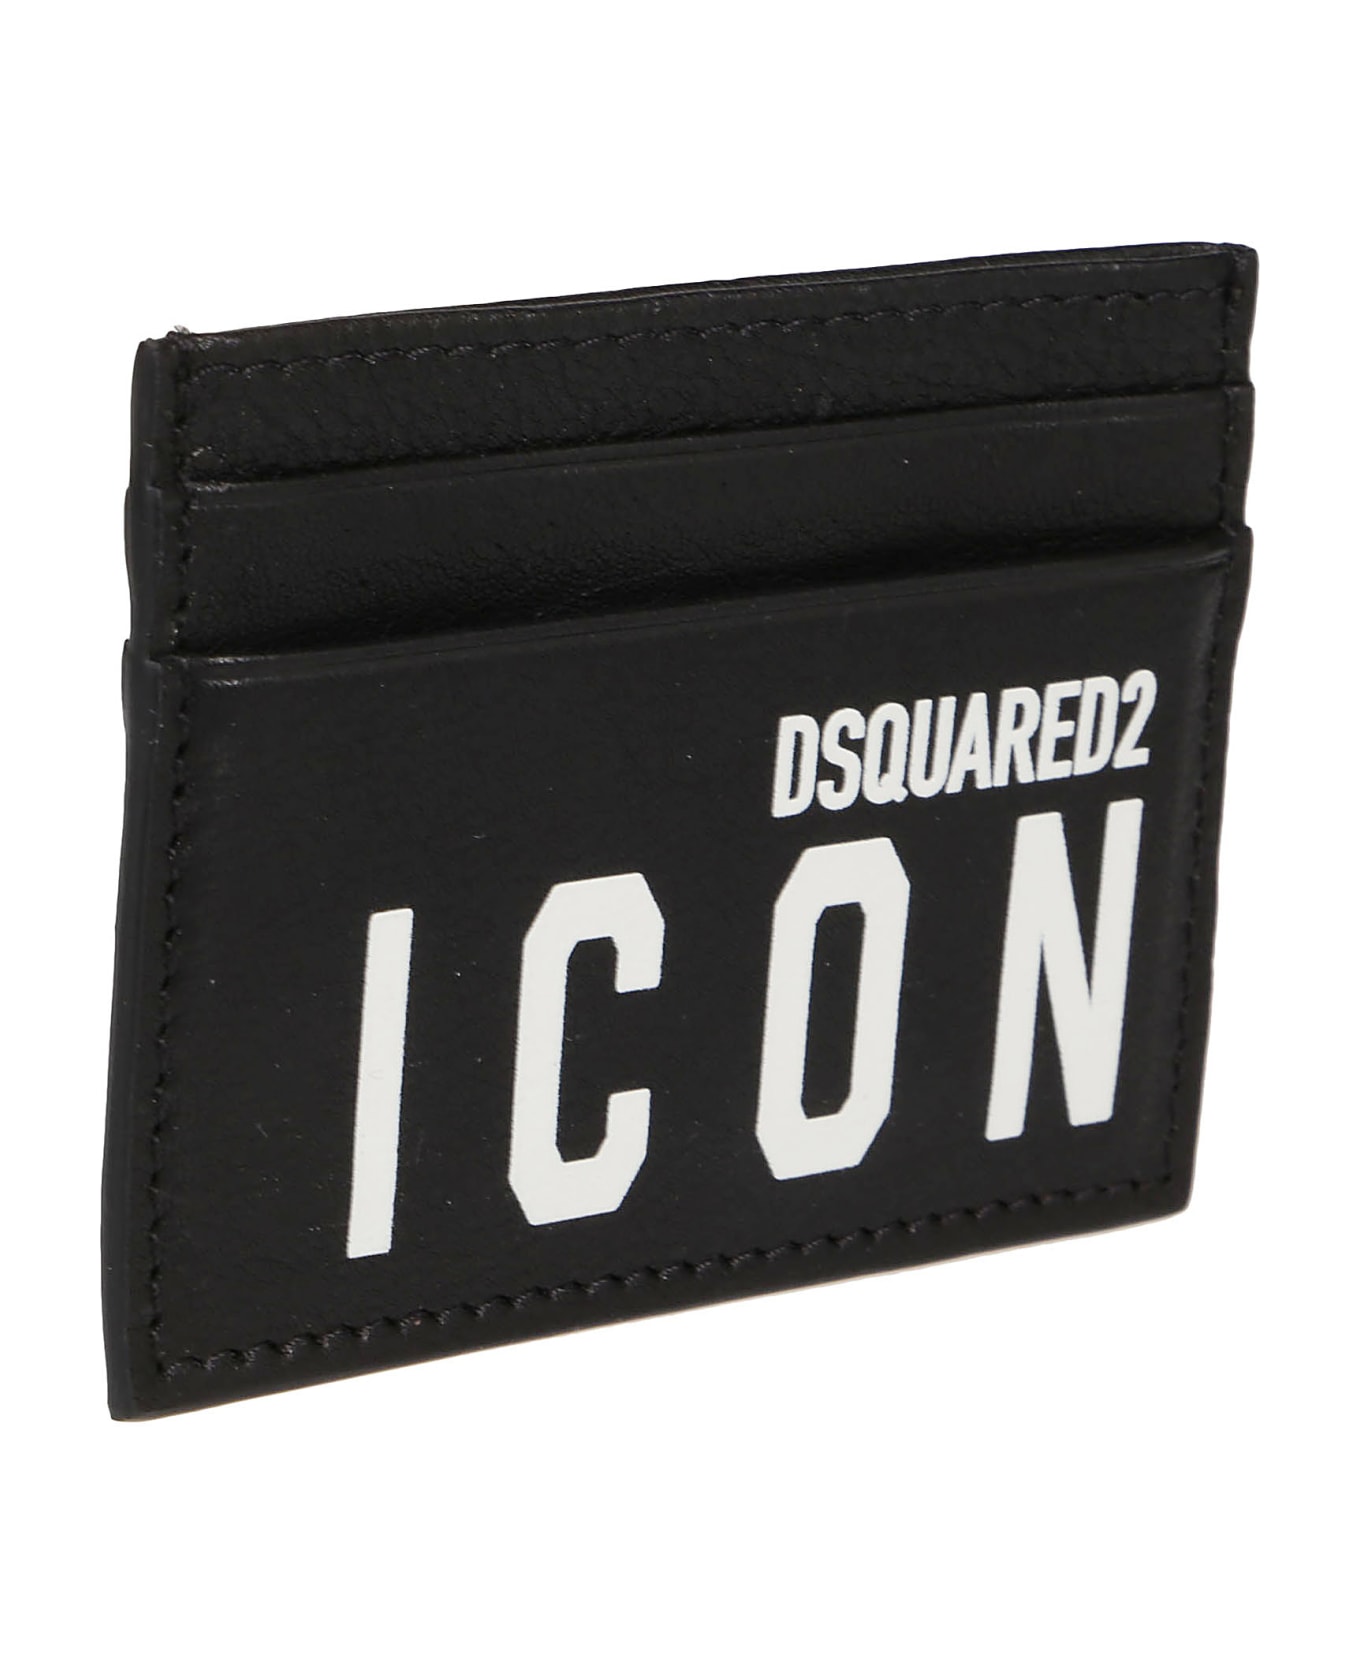 Dsquared2 Be Icon Credit Card Holder - Nero/bianco